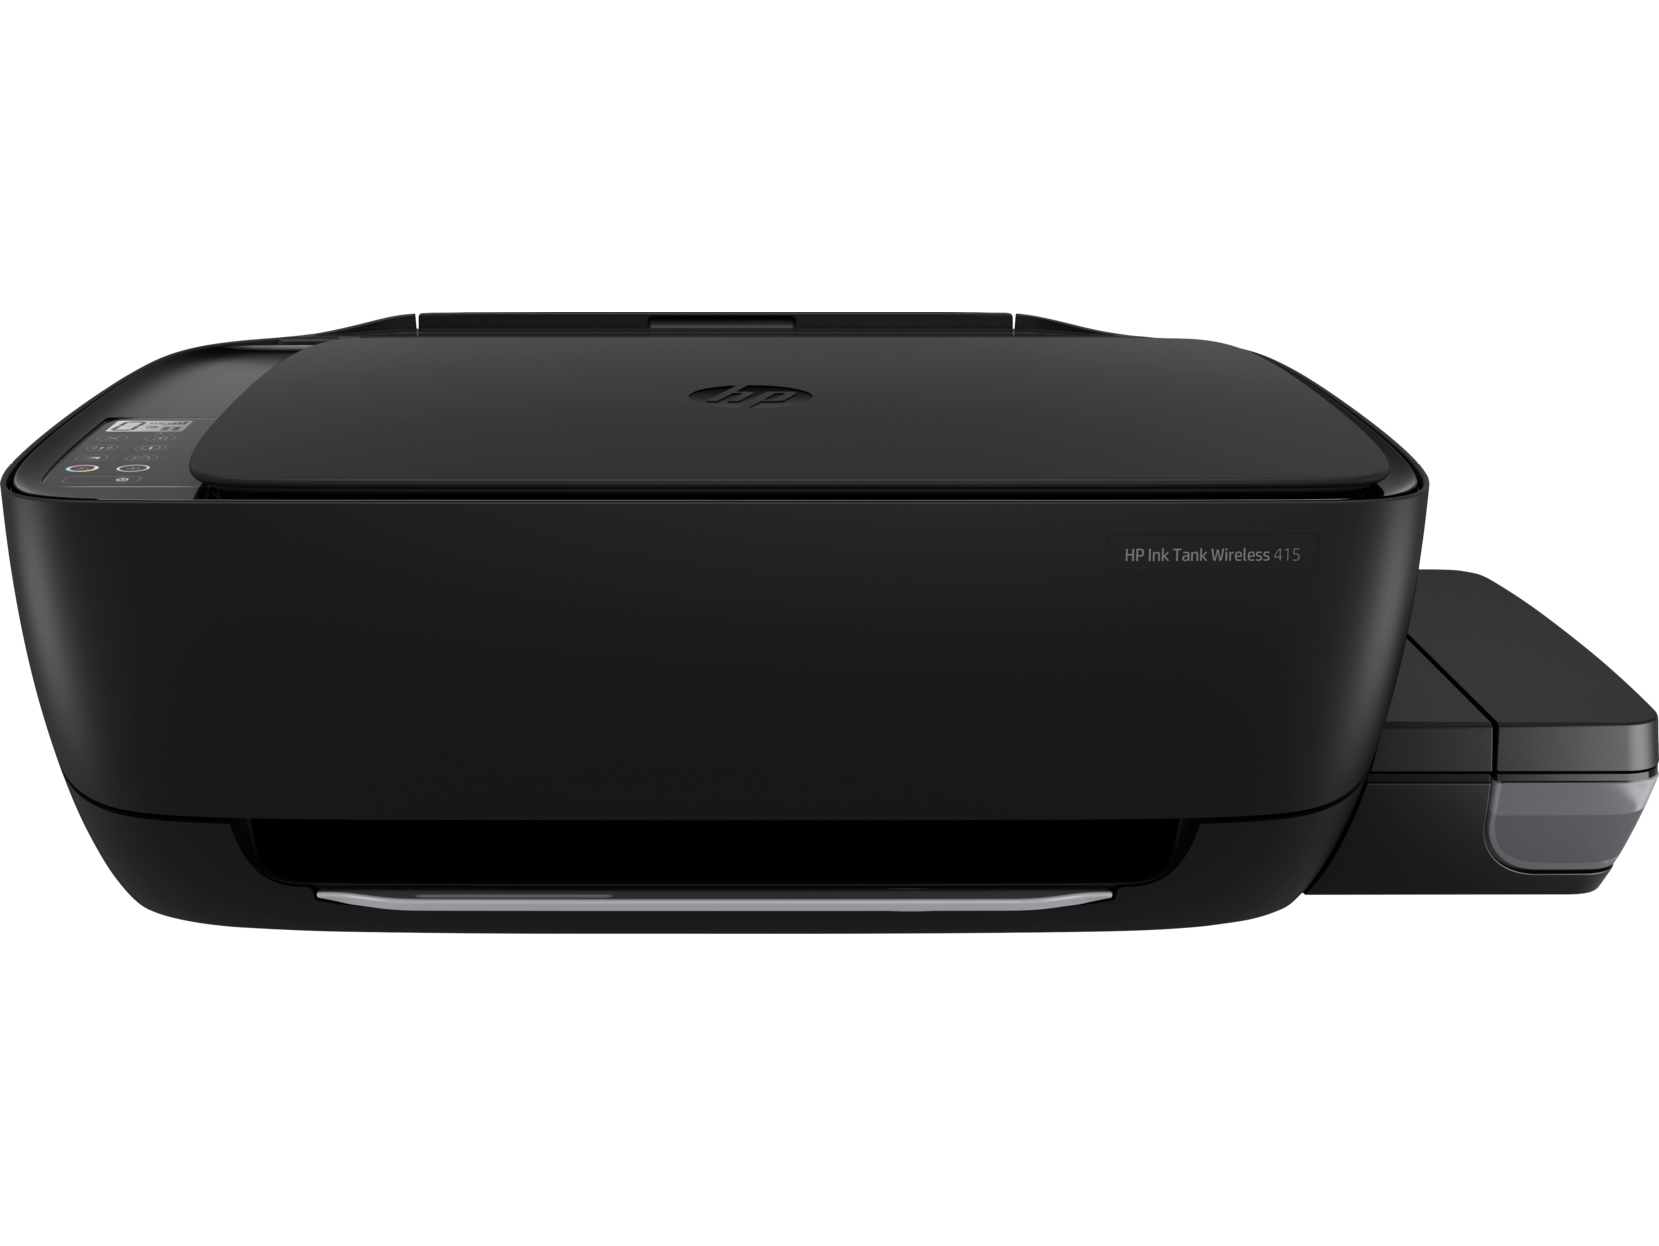 Z4B53A – HP Deskjet Inktank Wireless 415 AIO Printer